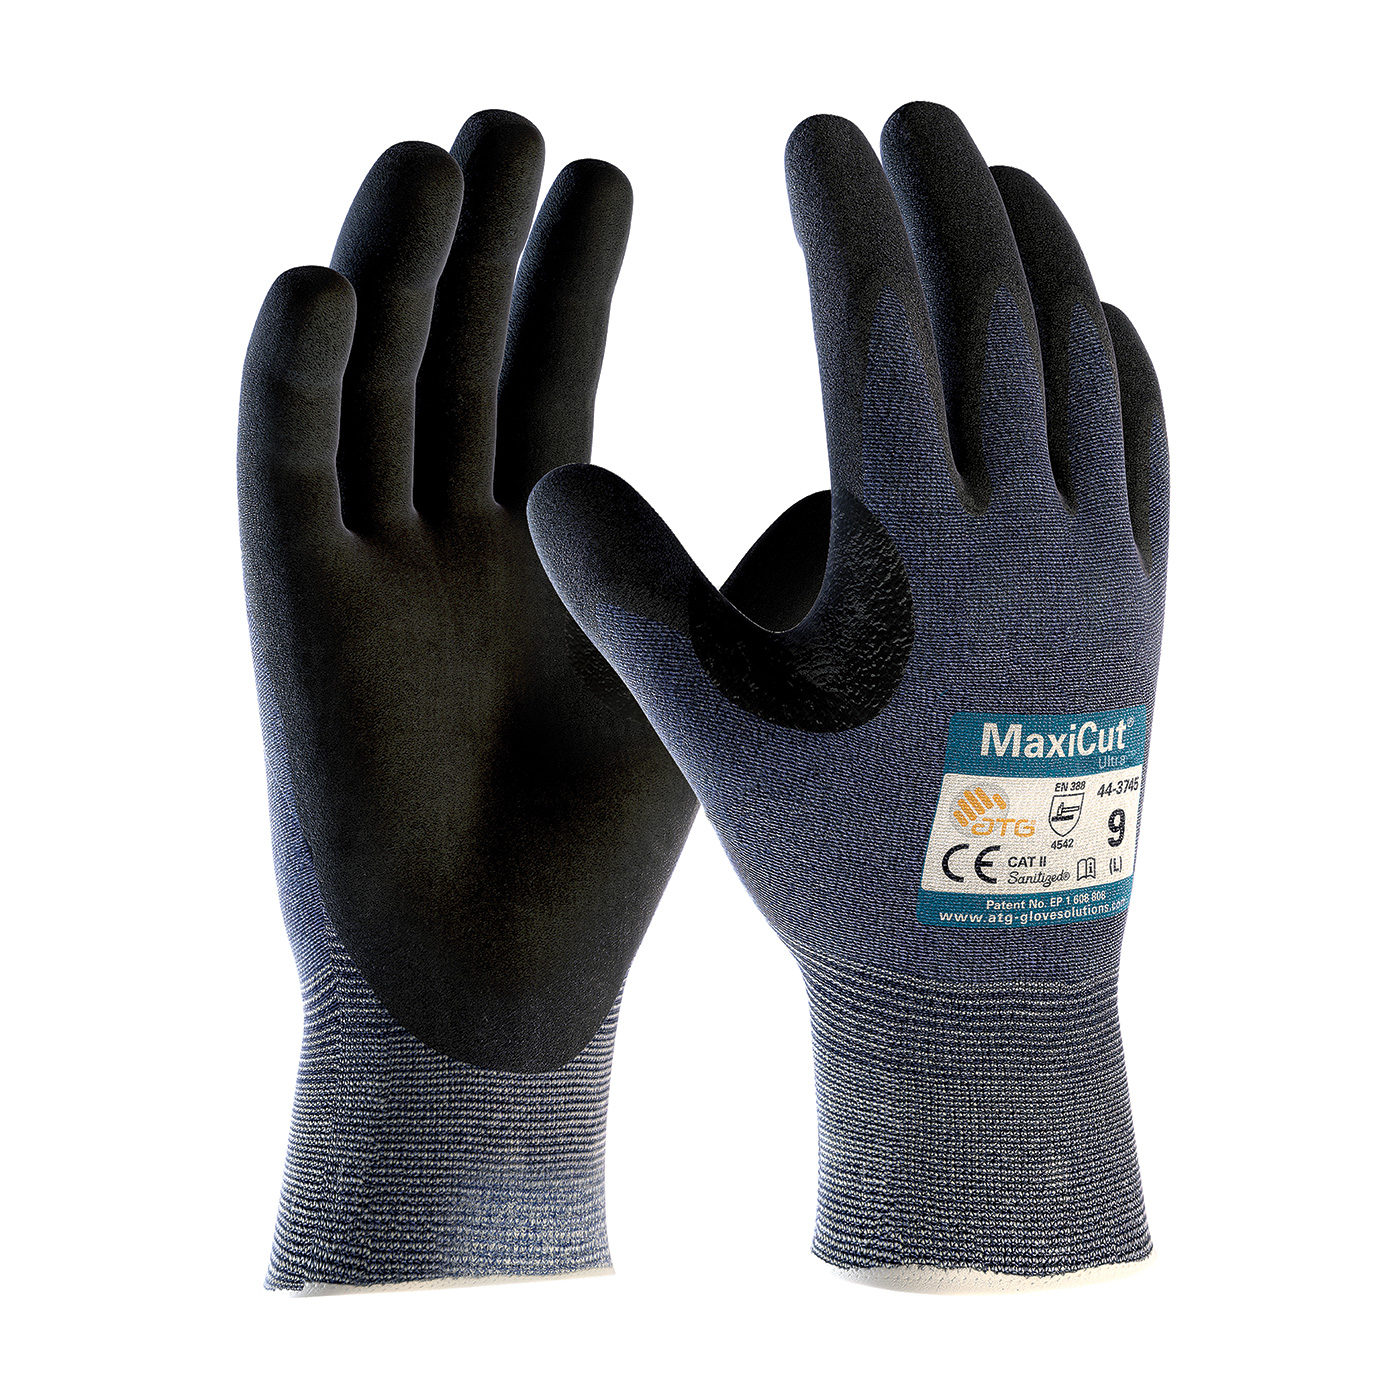 PIP 44-3745/XXL MaxiCut Ultra Seamless Knit Engineered Yarn Glove with Premium Nitrile Coated MicroFoam Grip on Palm & Fingers - 2X-Large PID-44 3745 2X